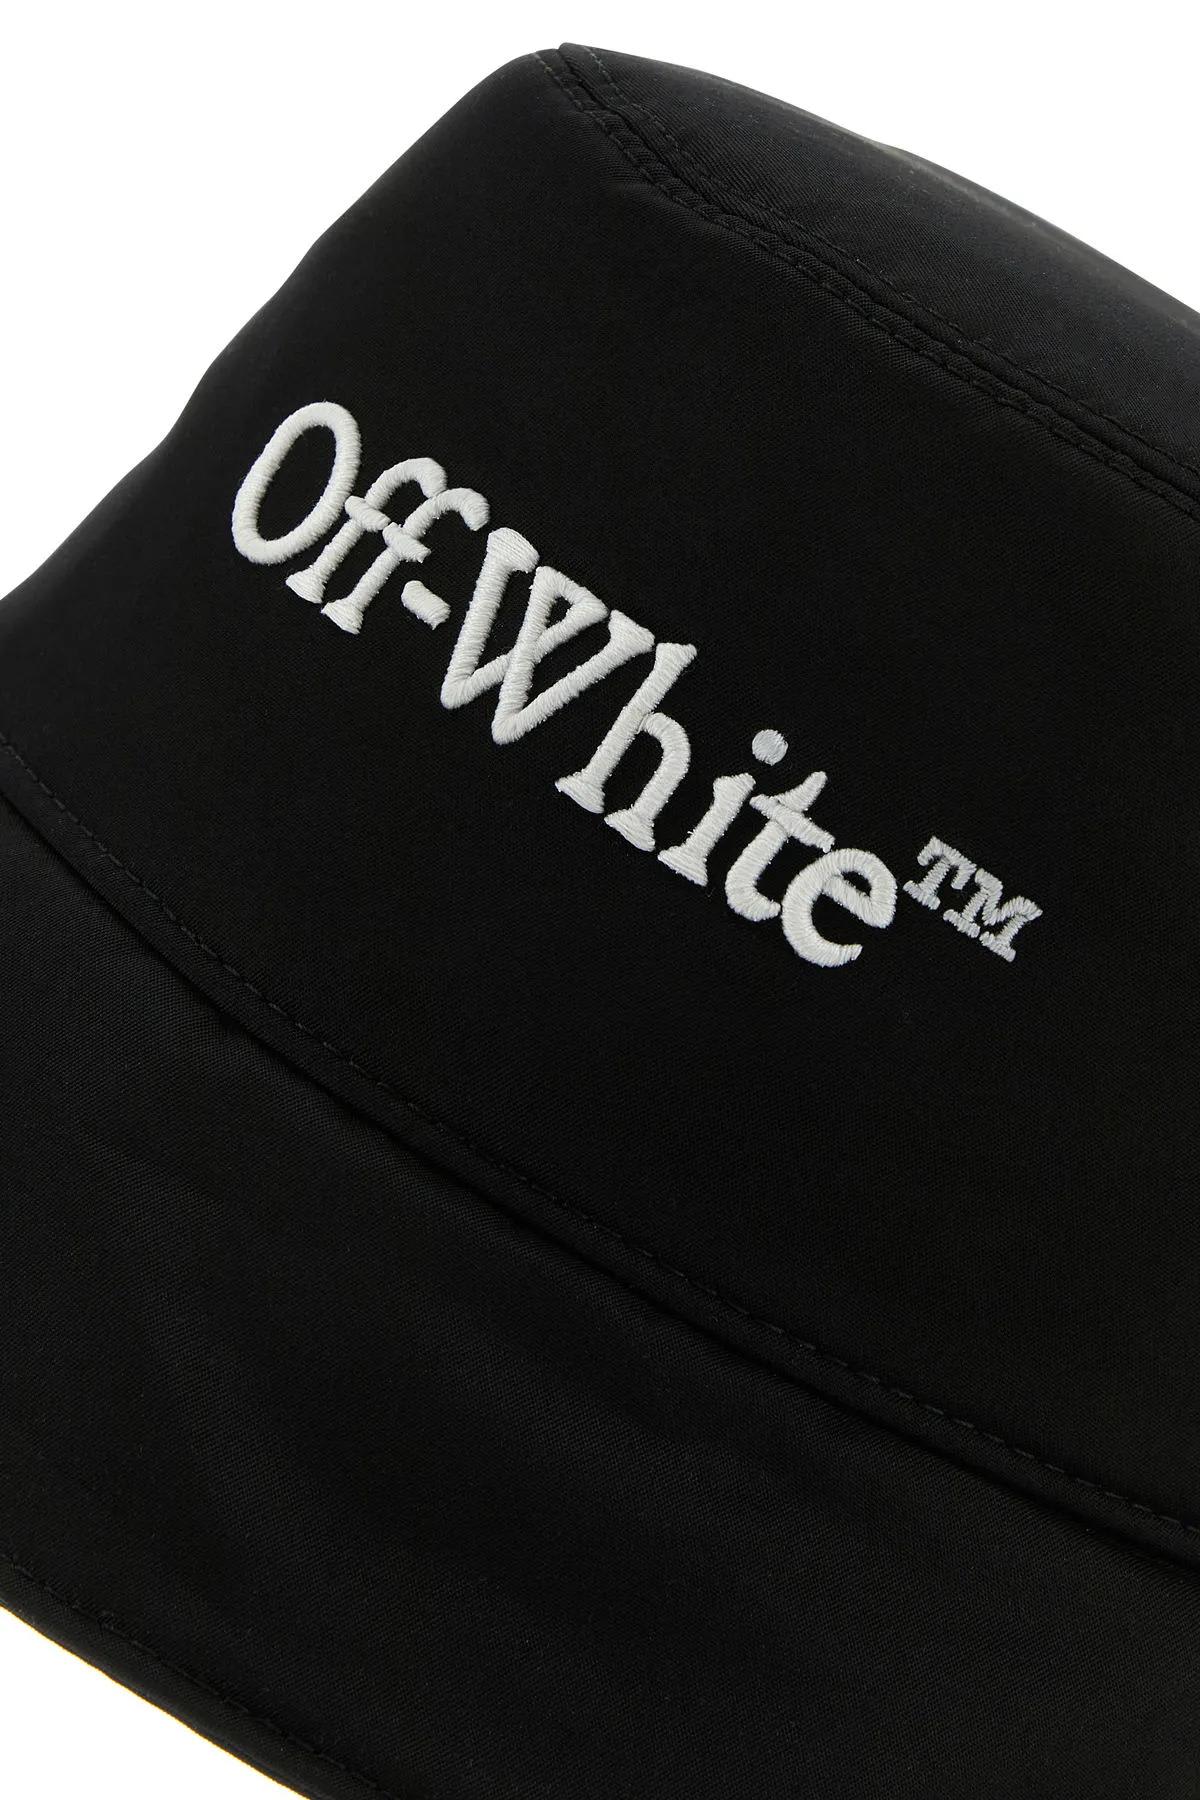 Shop Off-white Black Polyester Bucket Hat